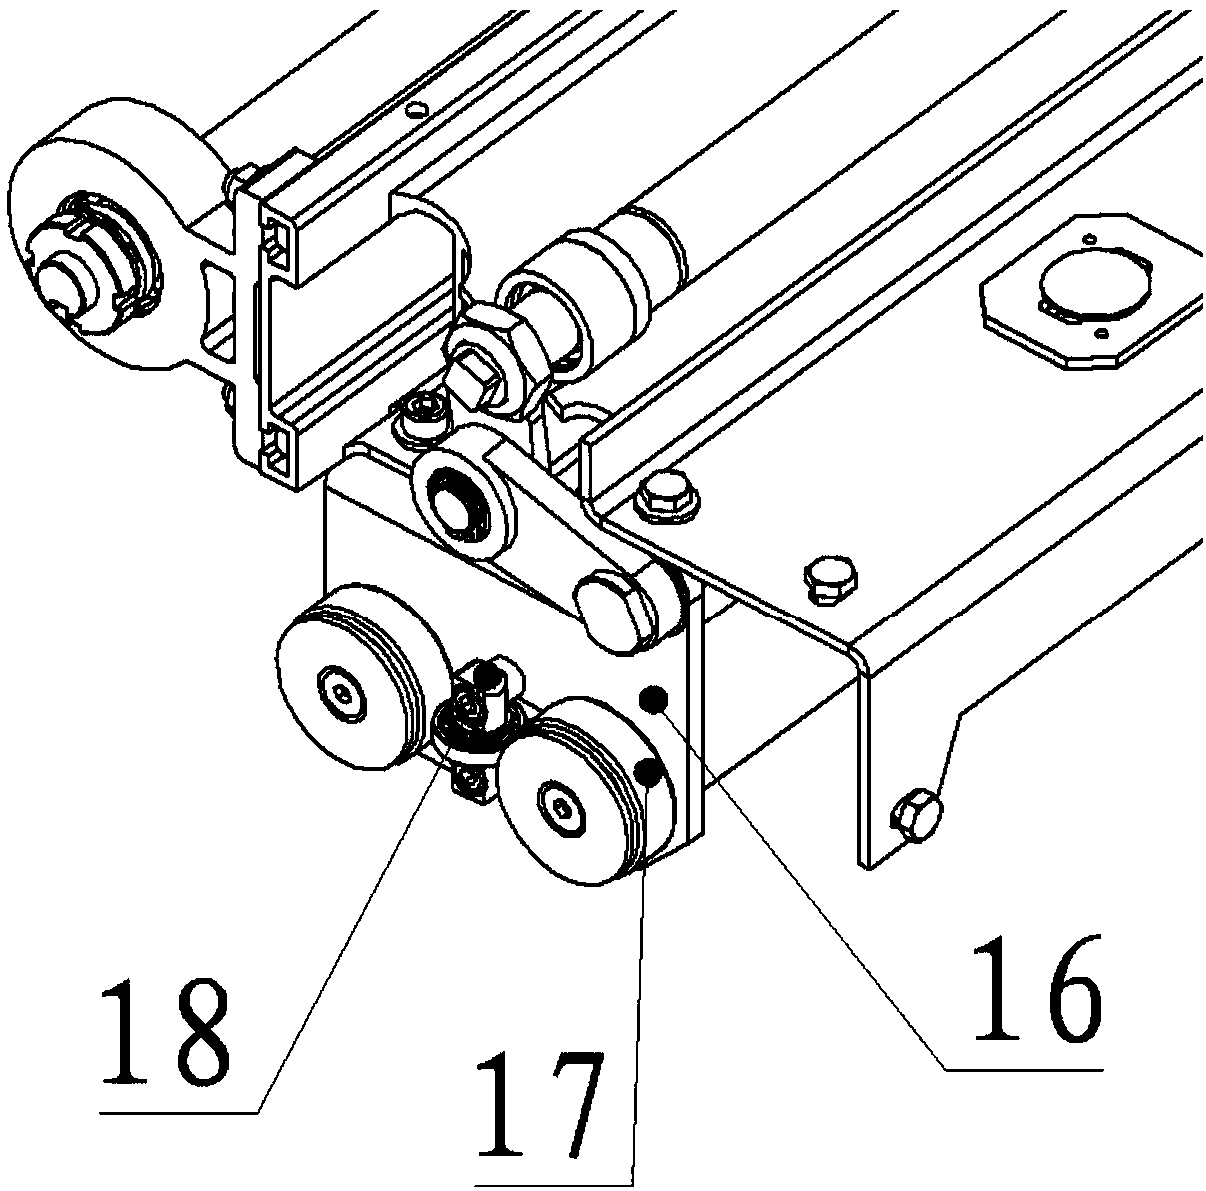 Bearing drive mechanism for vehicle door system